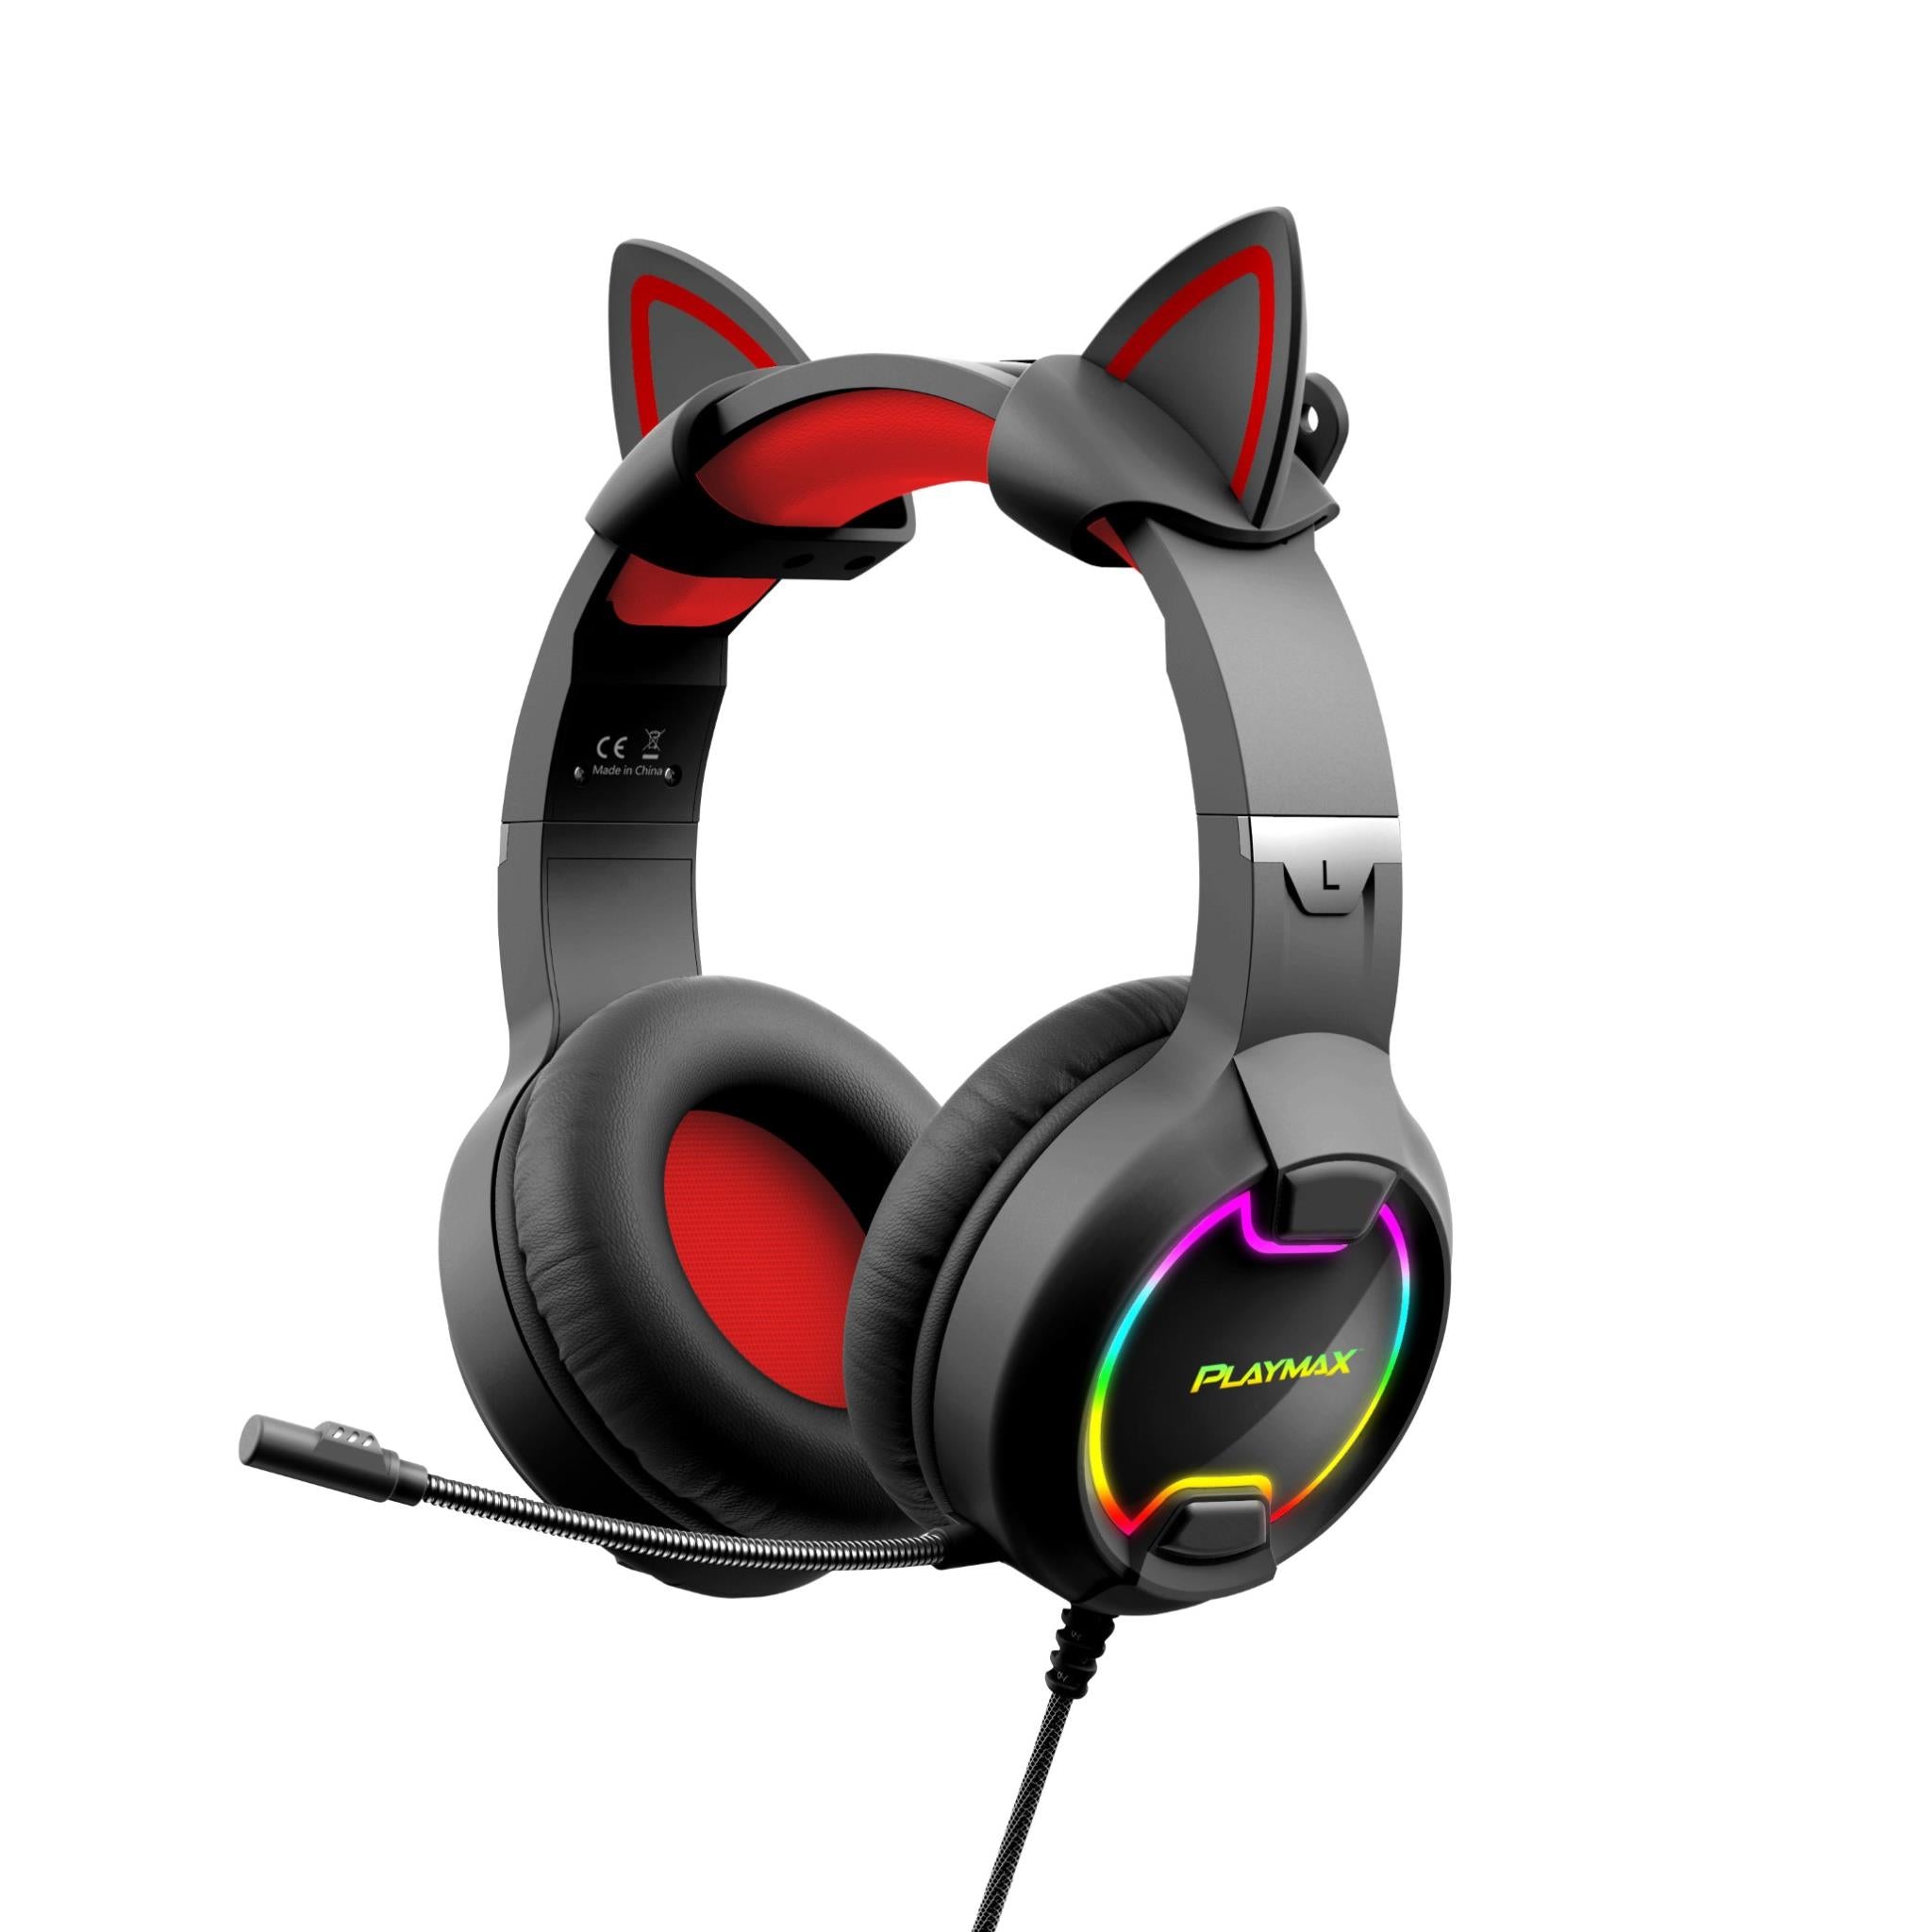 playmax black cat ear headphones